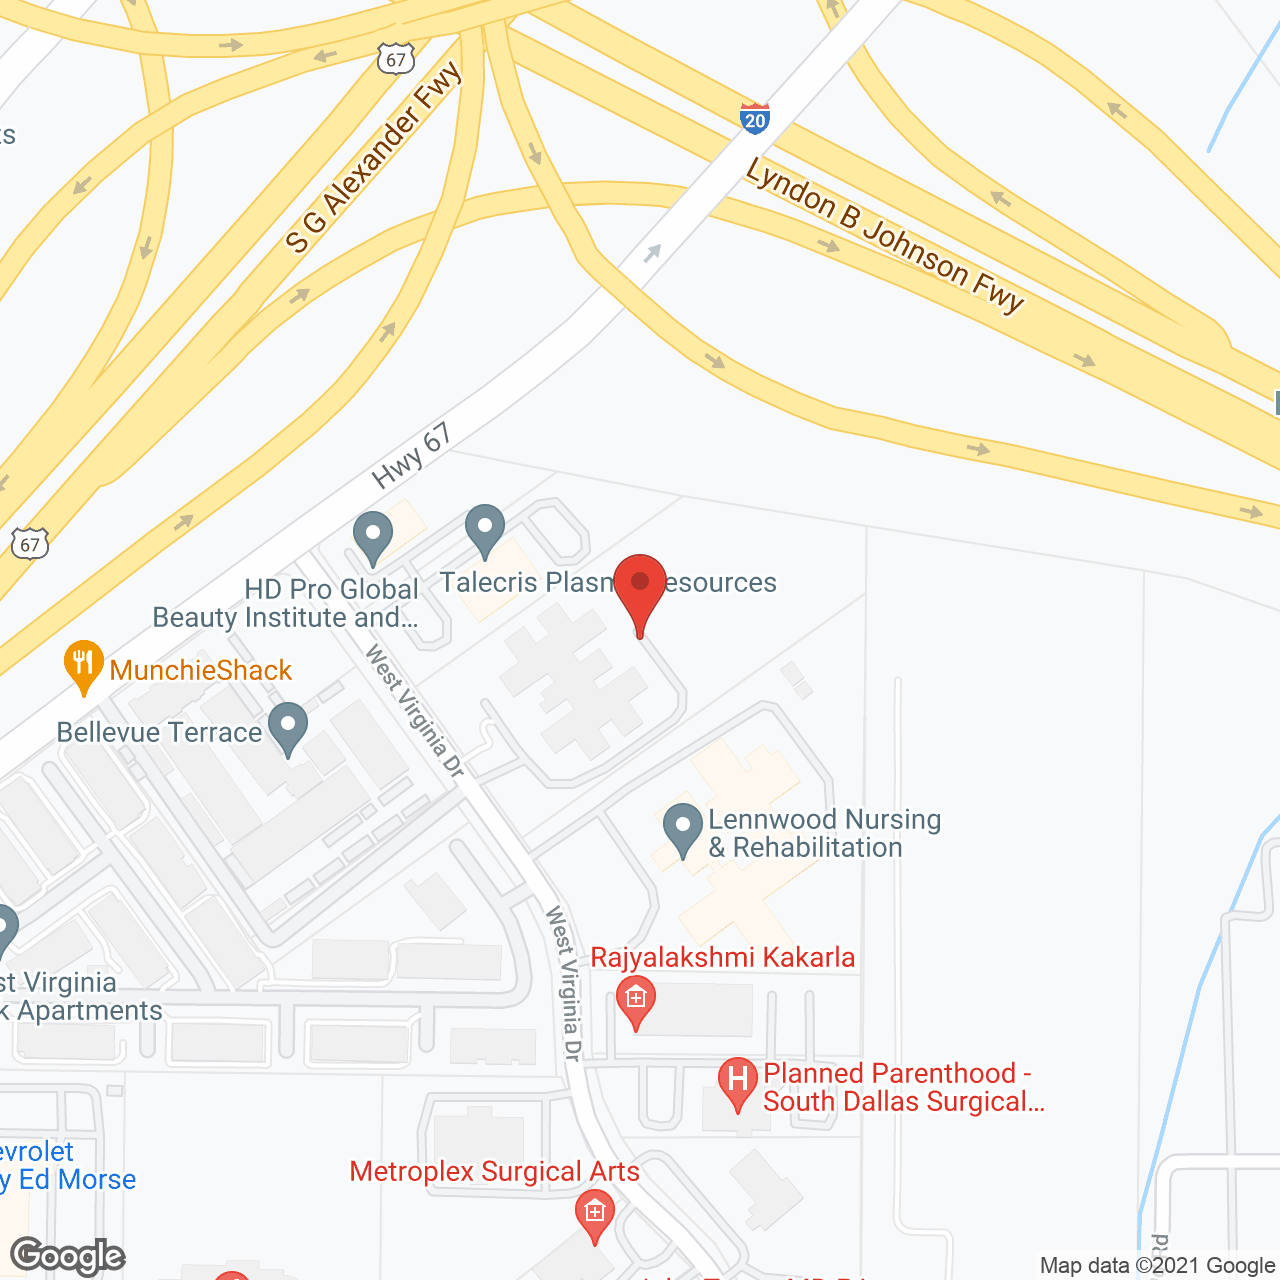 Entrust of DeSoto in google map